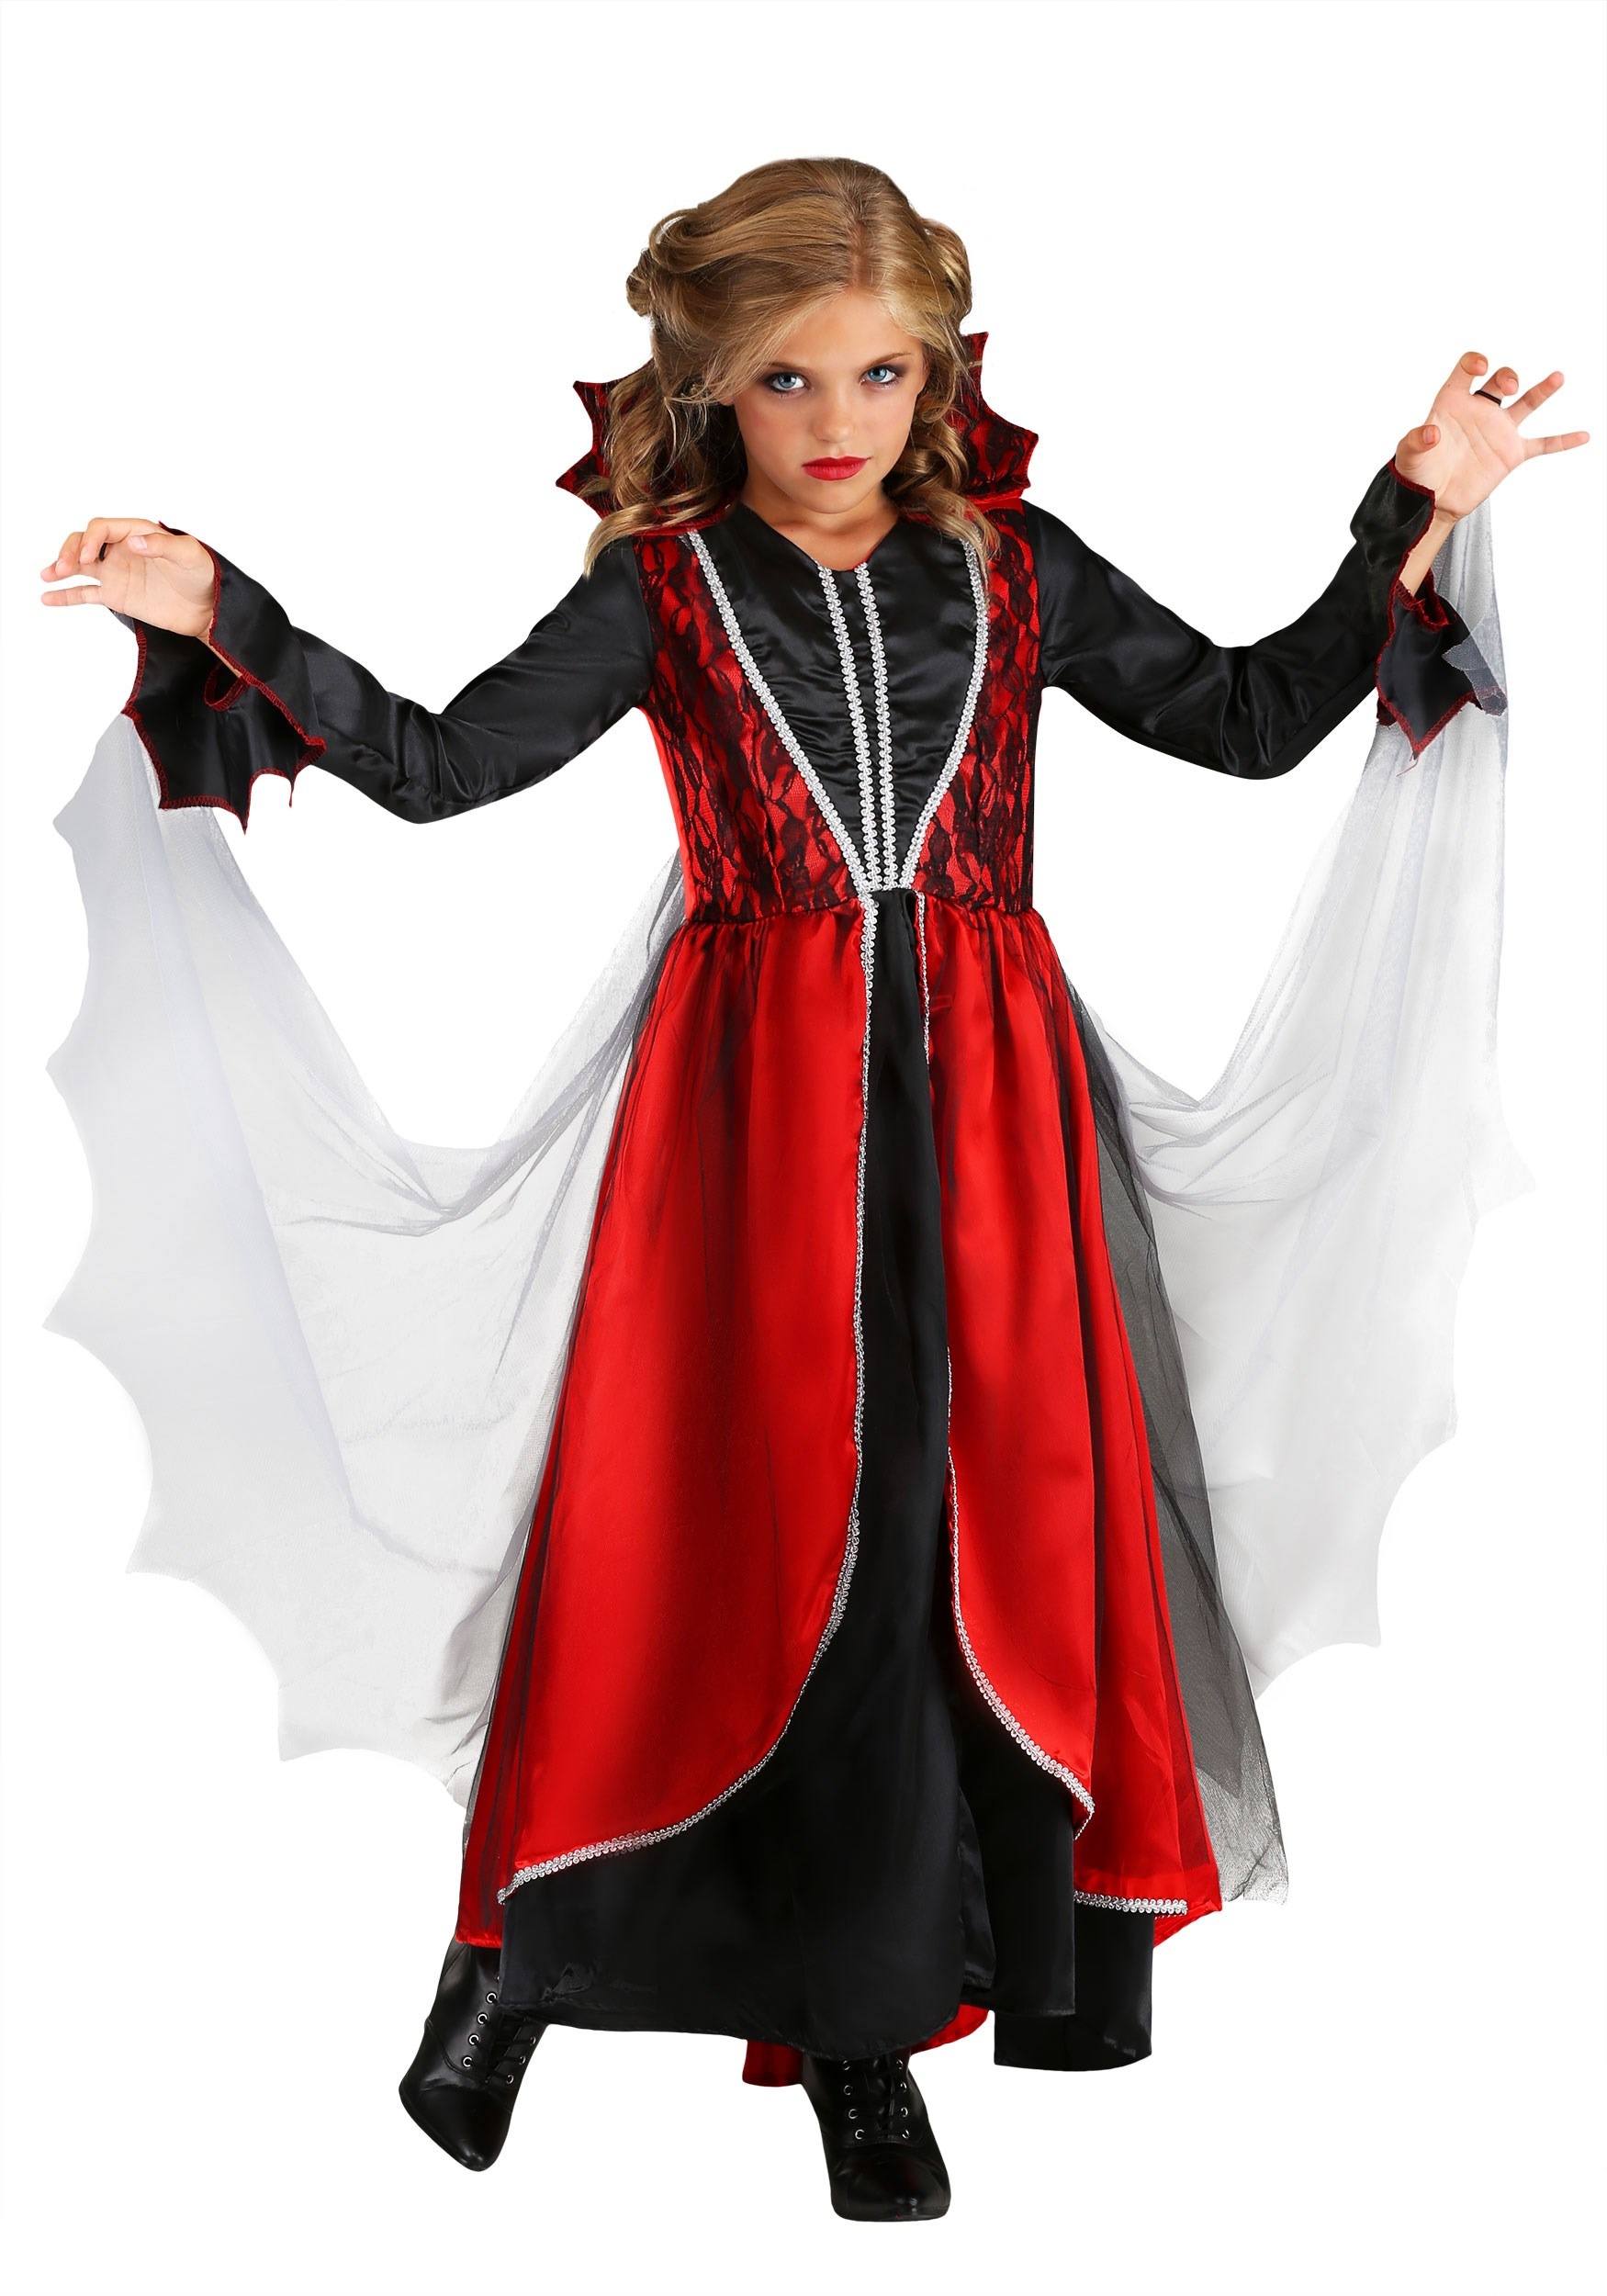 Photos - Fancy Dress FUN Costumes Girls Vampire Costume Black/Red FUN6051CH